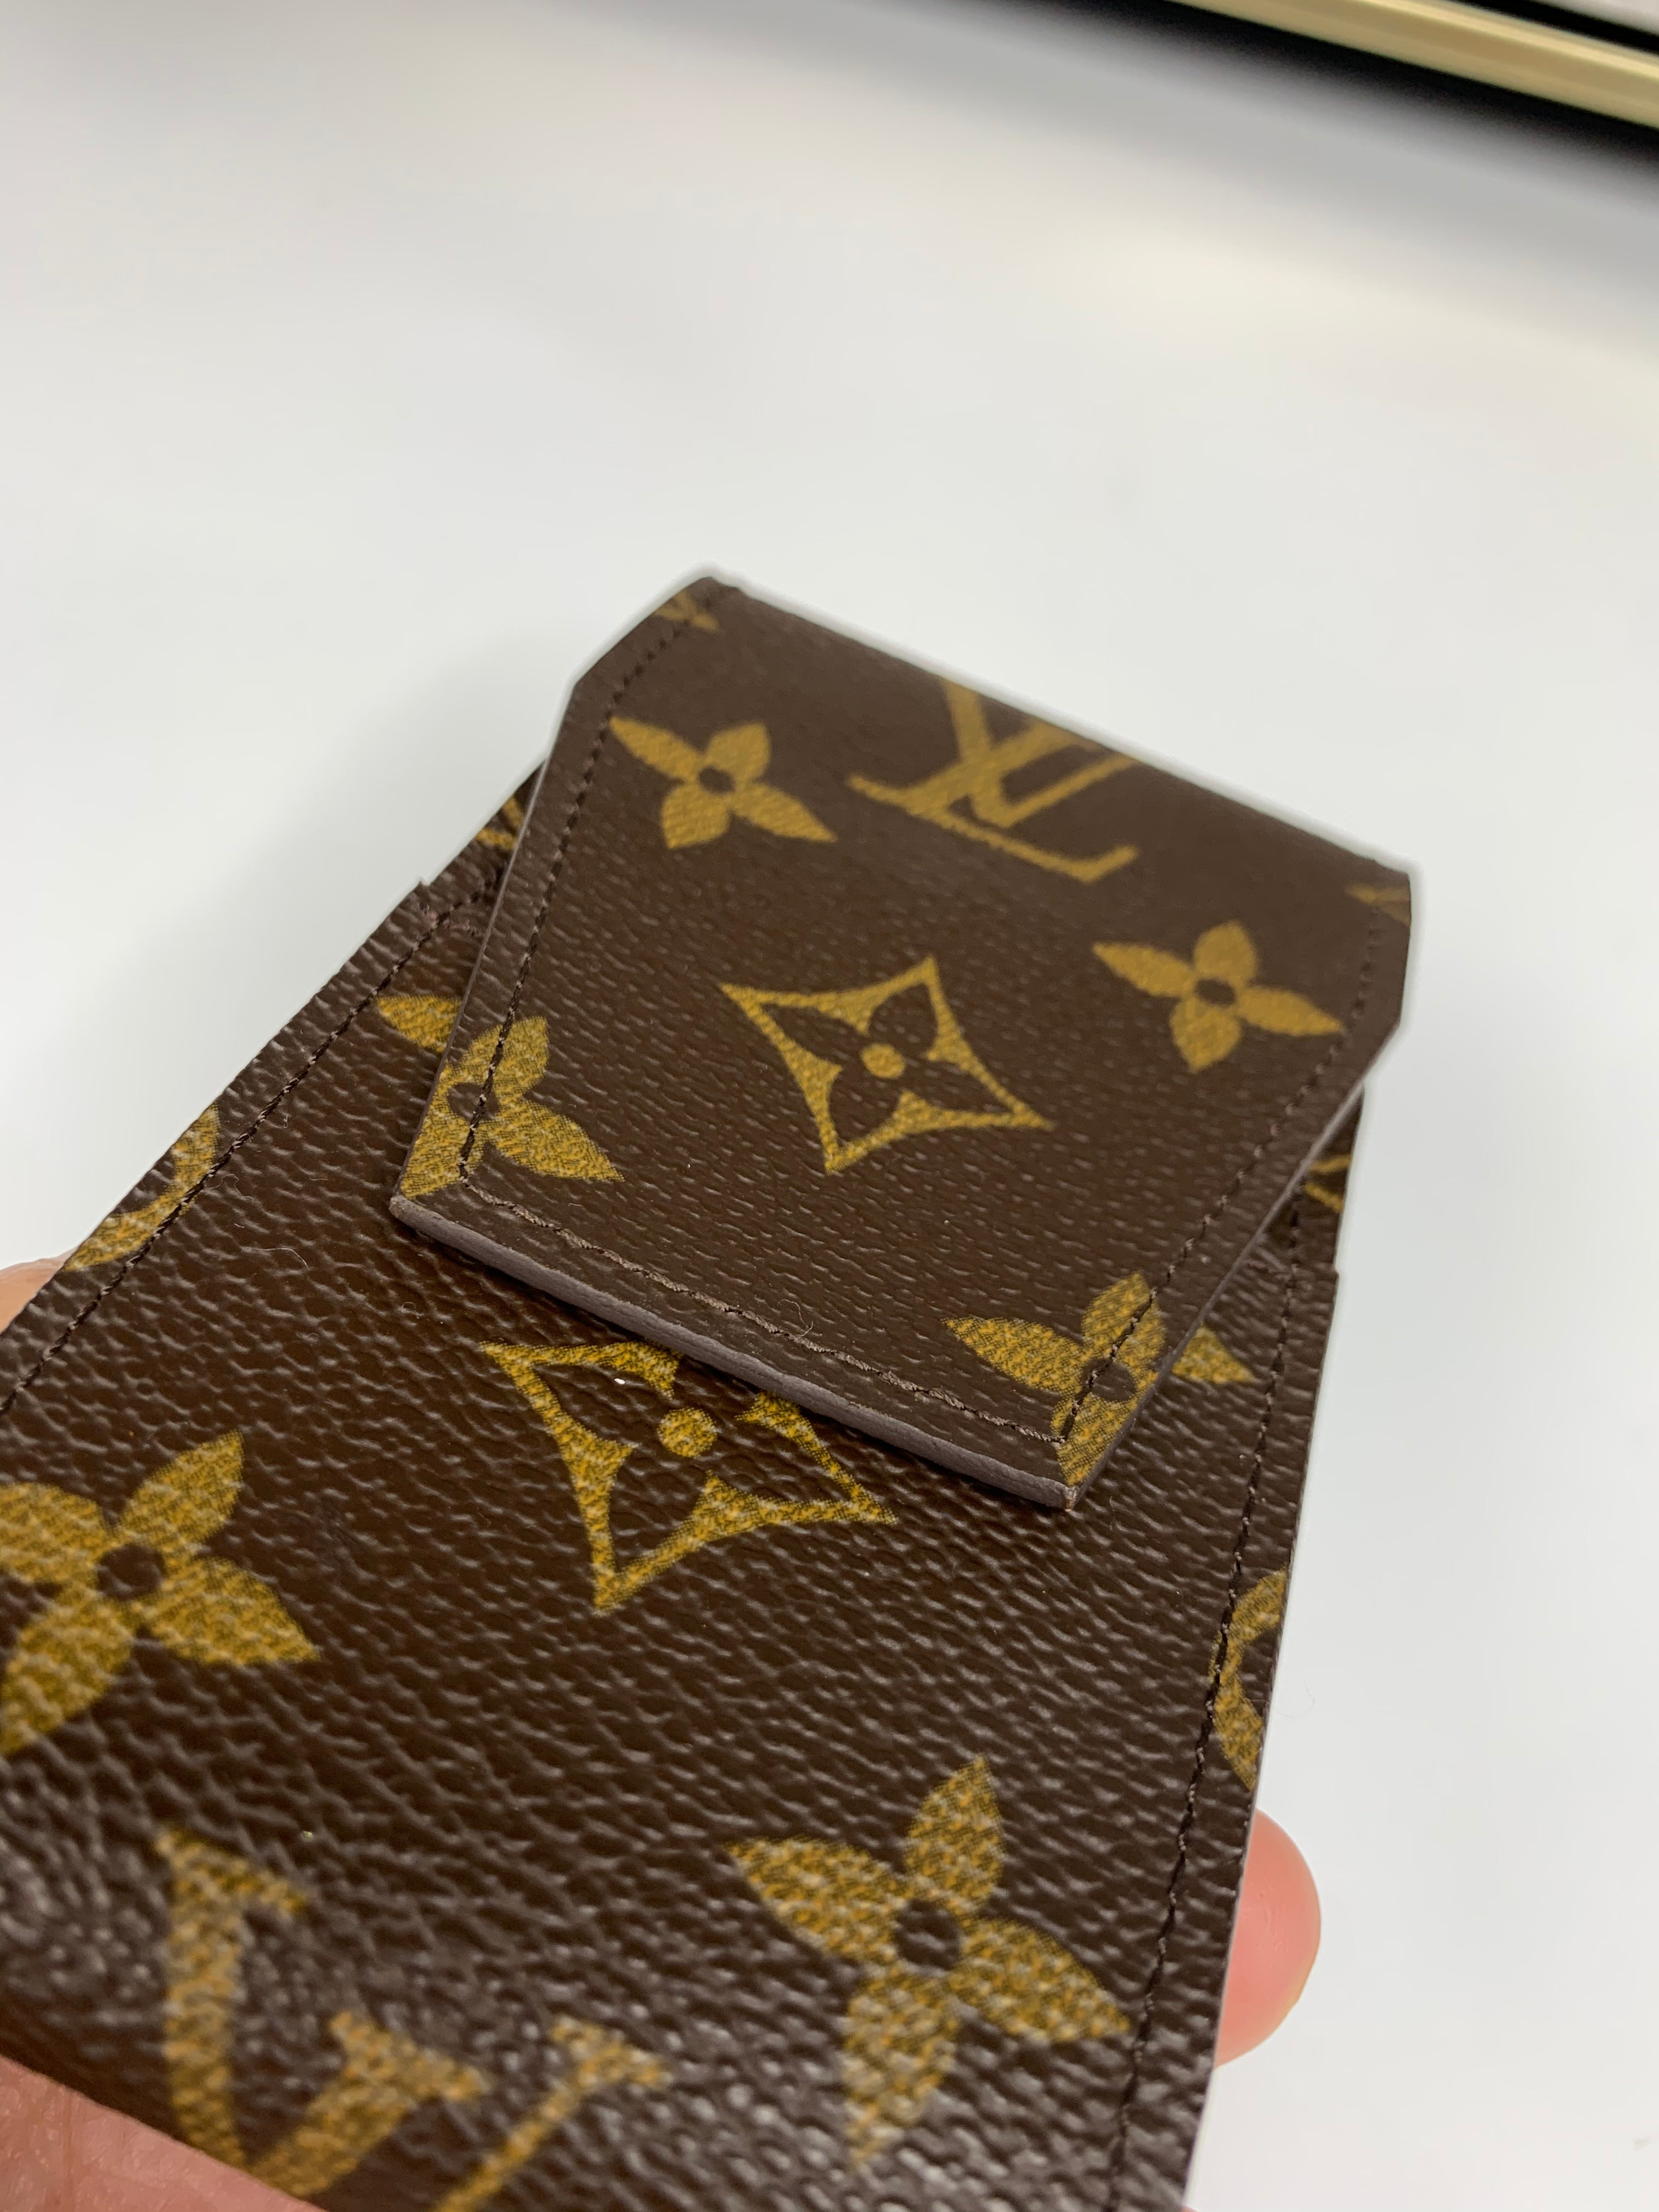 Louis Vuitton: Phone, Cards, Cash, Cigarettes, Small Items – Just Gorgeous  Studio